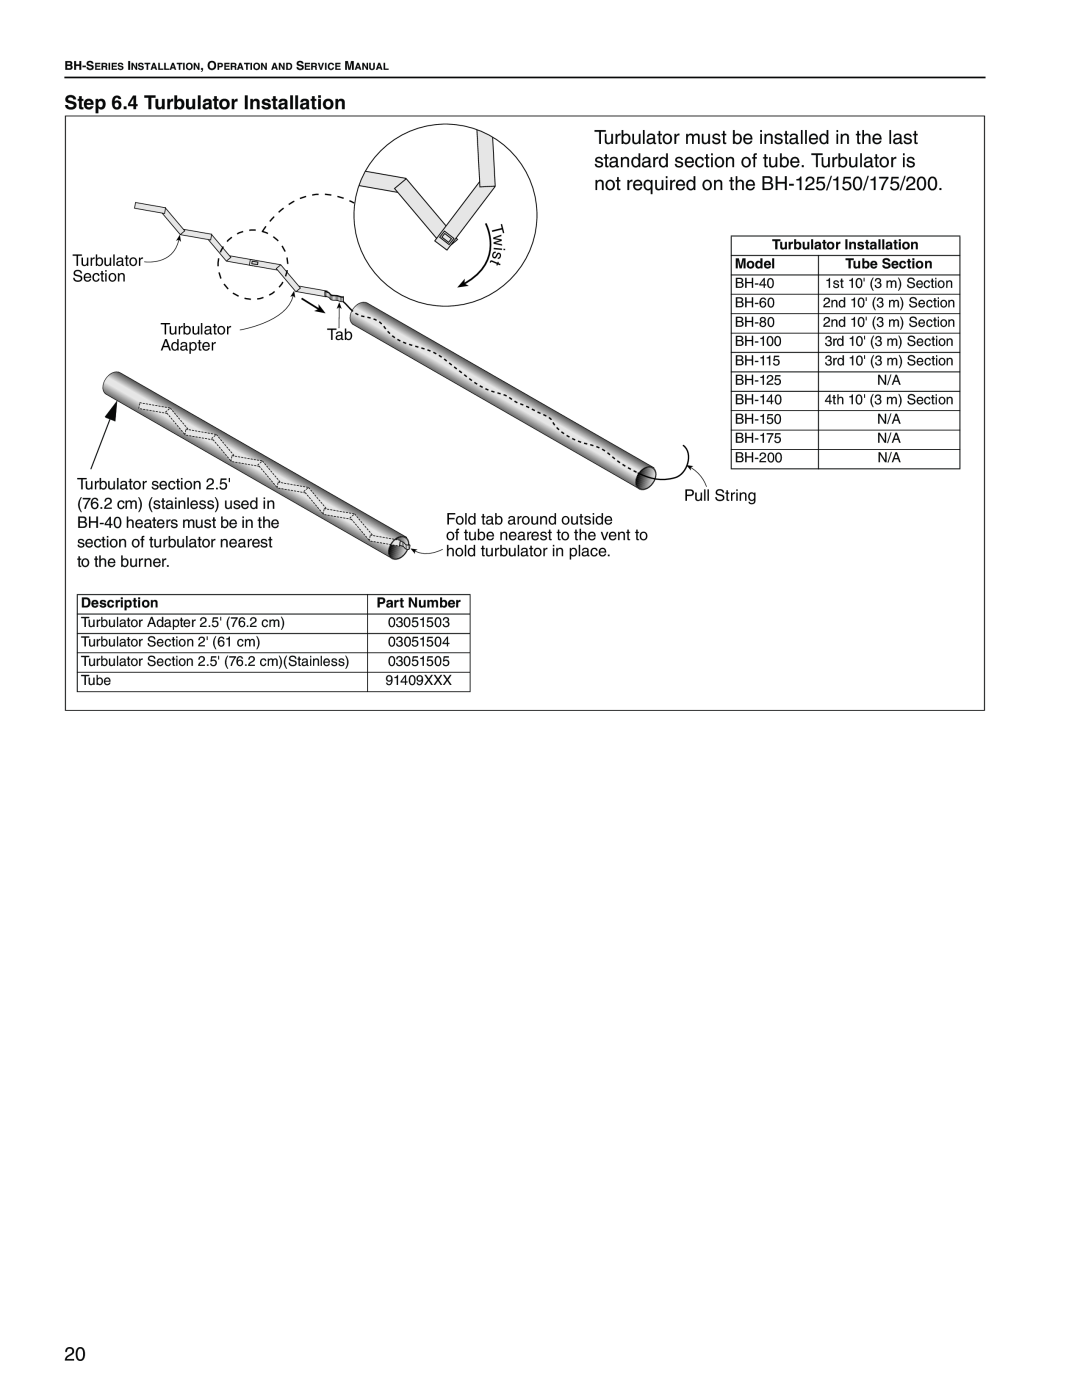 Roberts Gorden Linear Heater manual 4 Turbulator Installation 